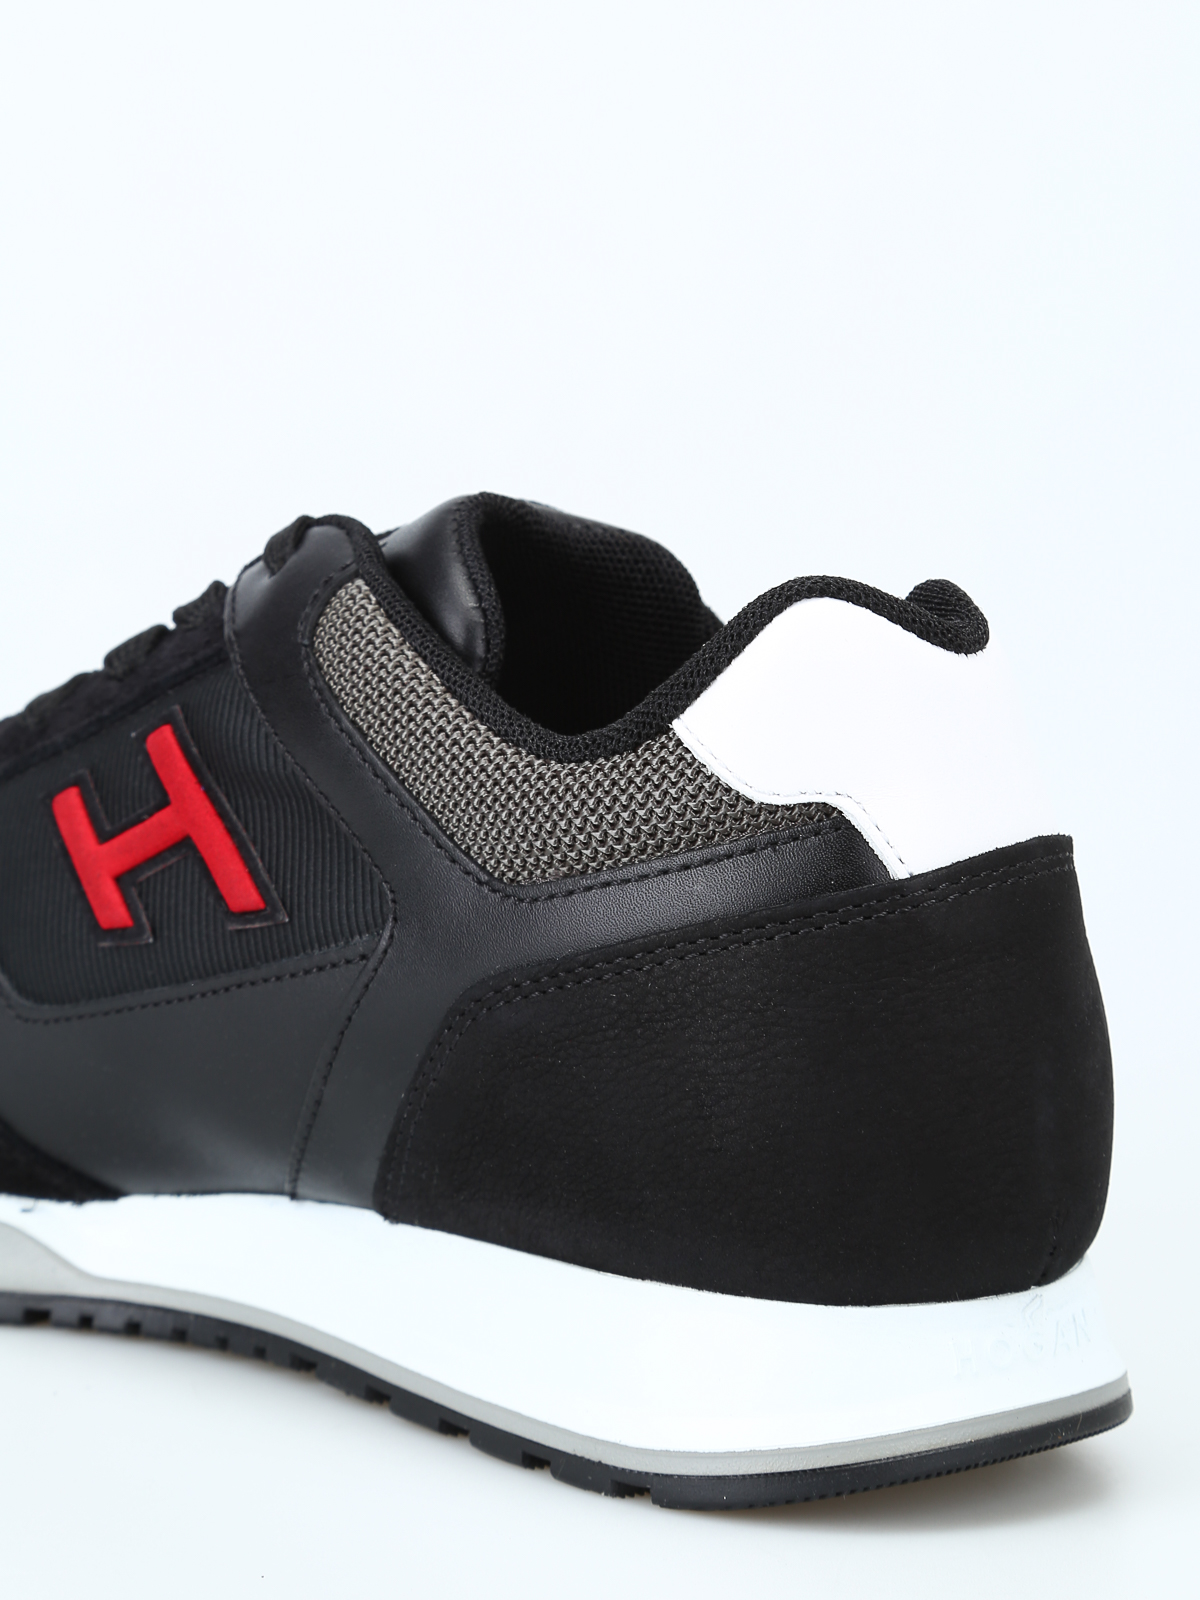 Hogan - Sneaker nere e rosse H321 - sneakers - HXM3210Y860JRF6EEV